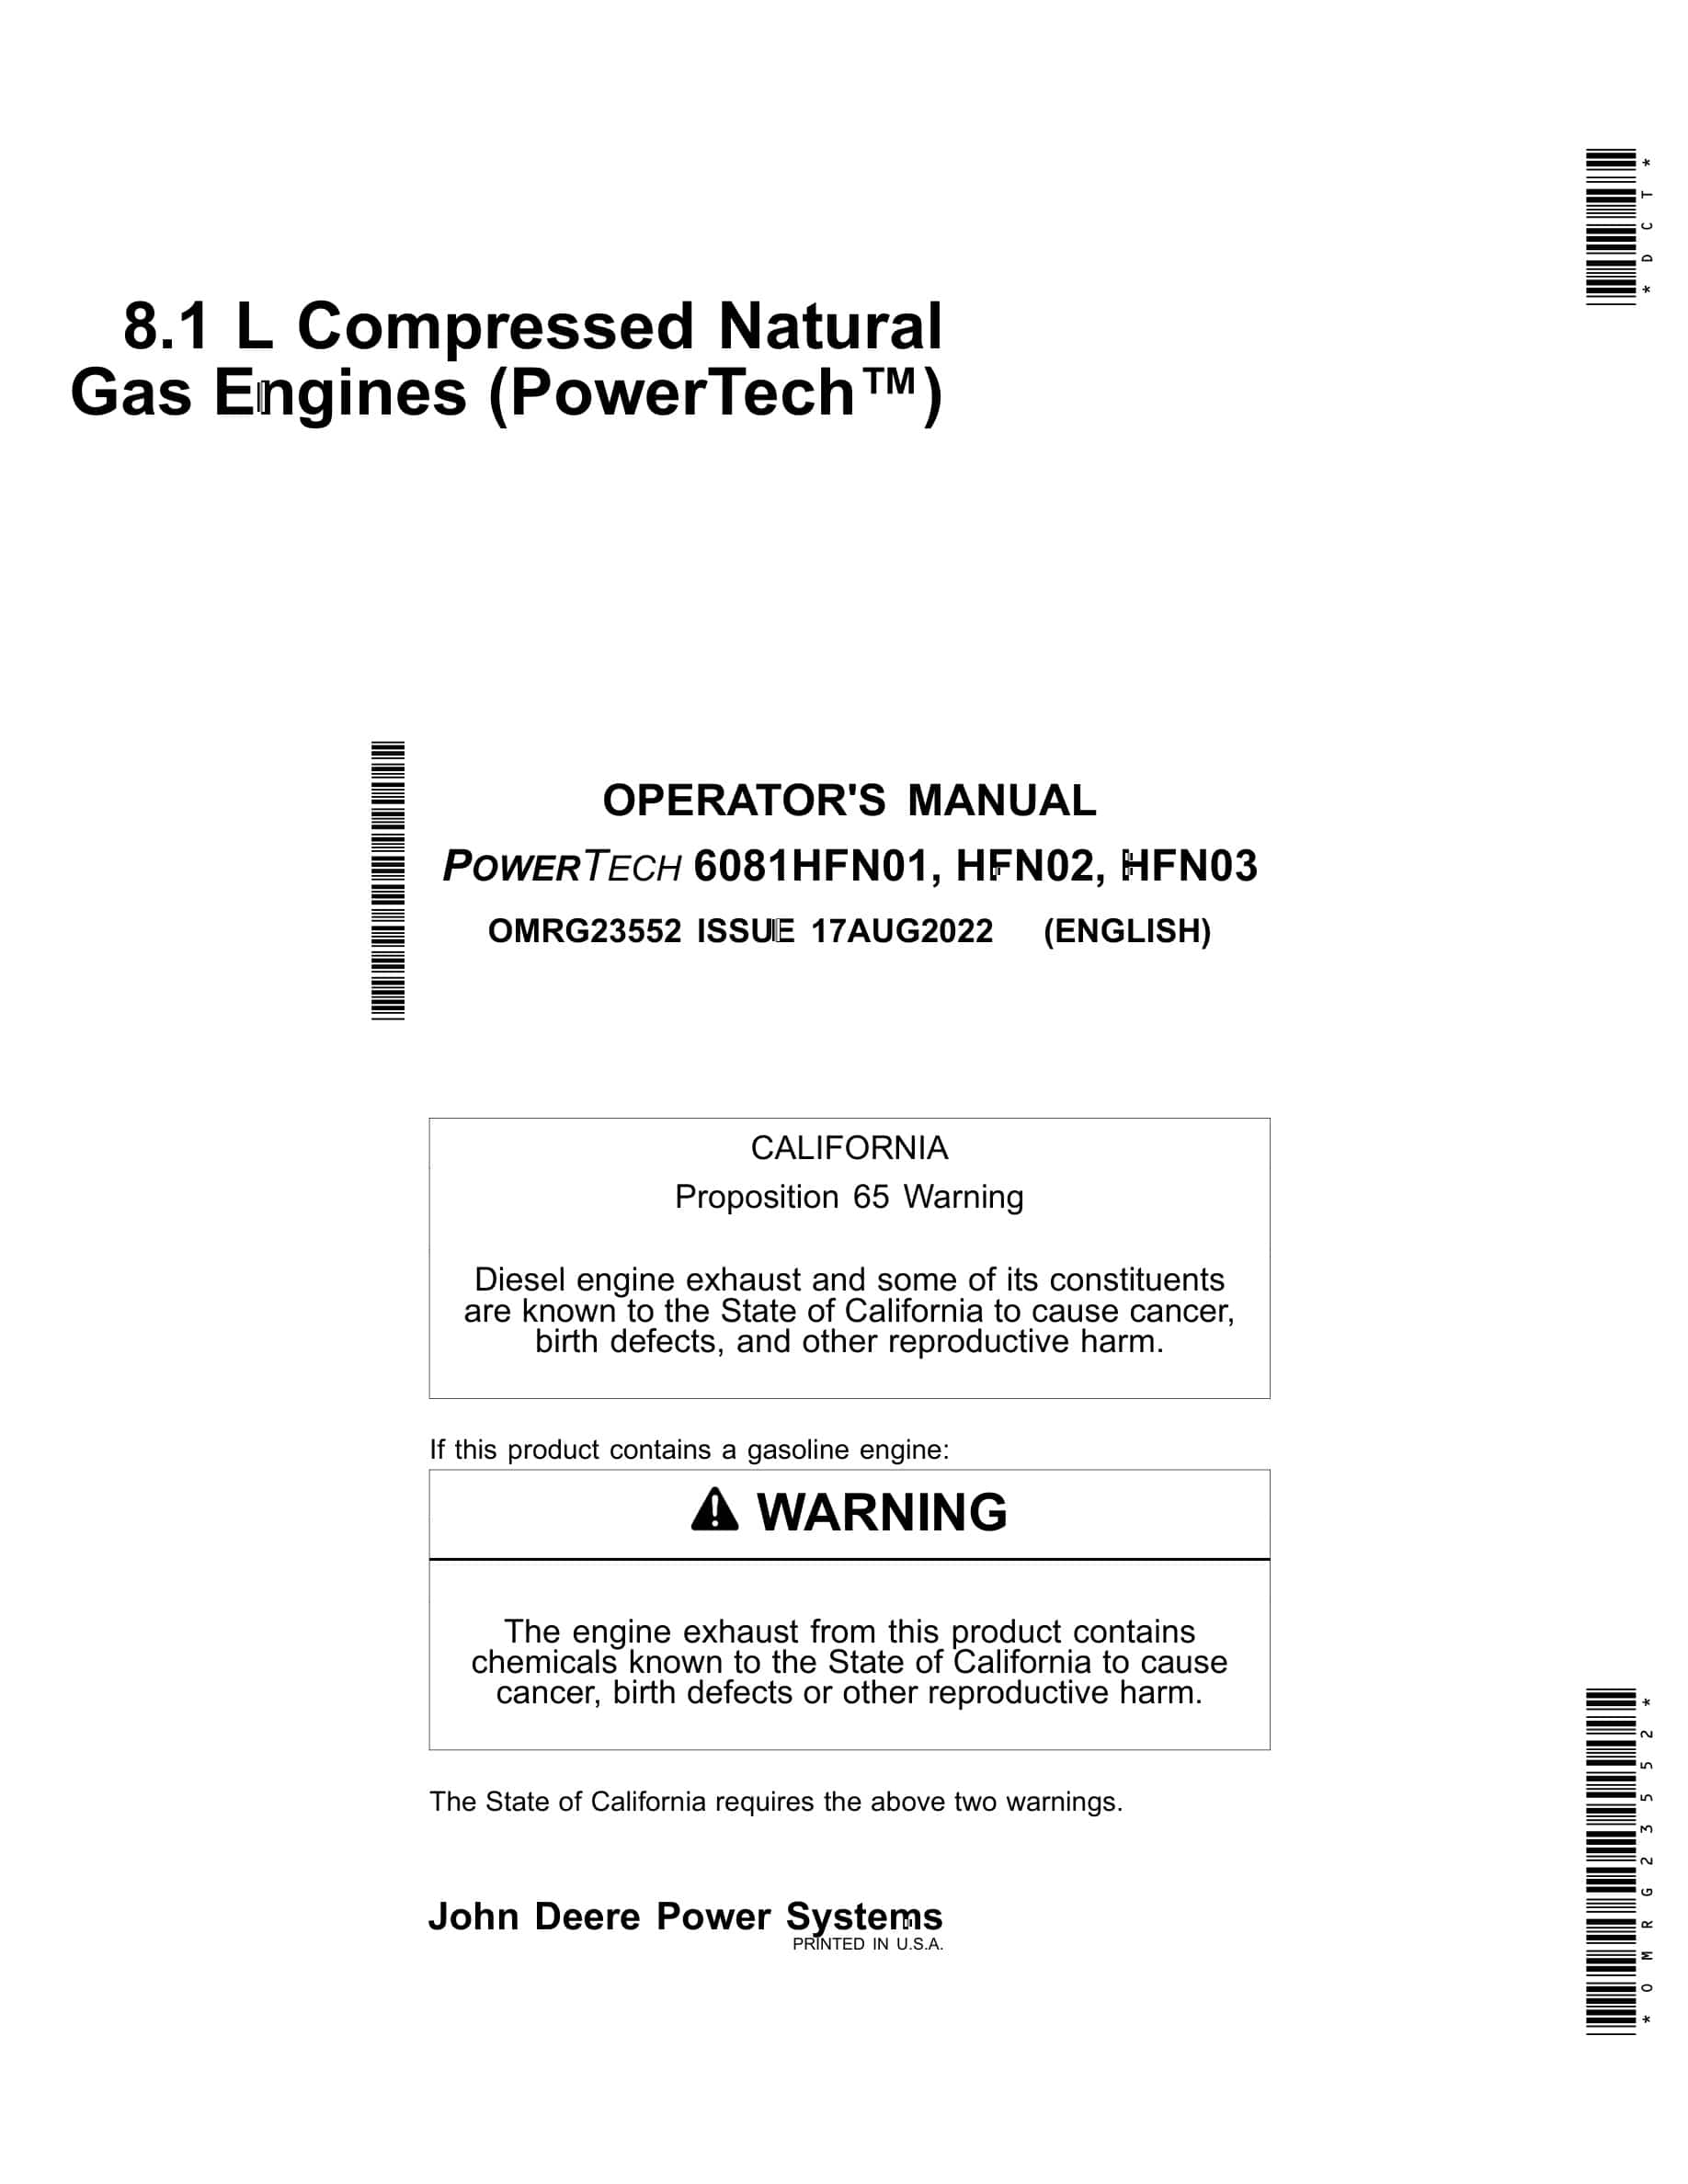 John Deere PowerTech 8.1 L 6081HFN01, HFN02, HFN03 Compressed Natural Gas Engines Operator Manual OMRG23552-1